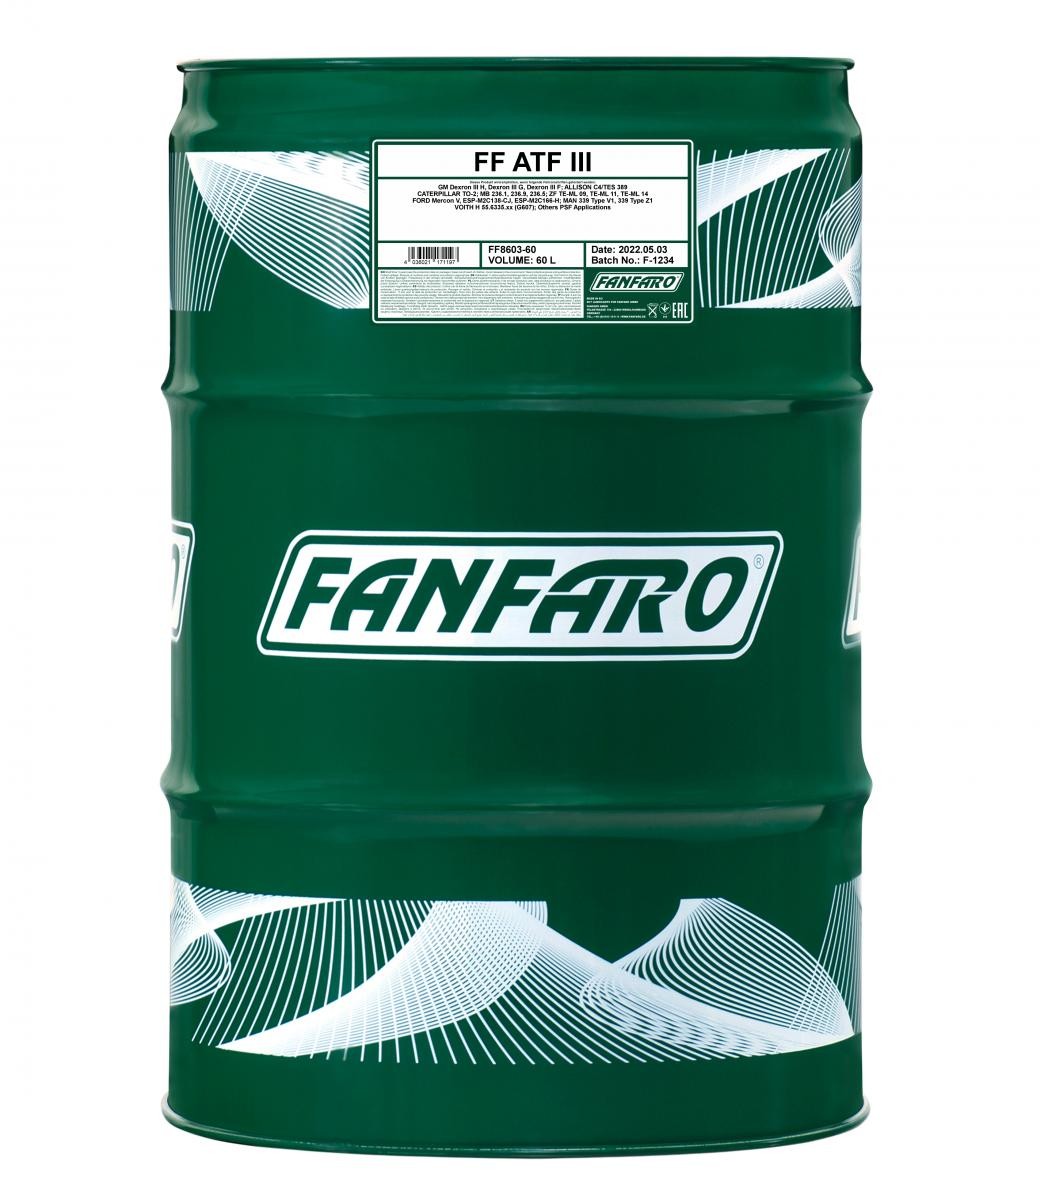 FF8603-60 FANFARO Automatikgetriebeöl DAF 65 CF